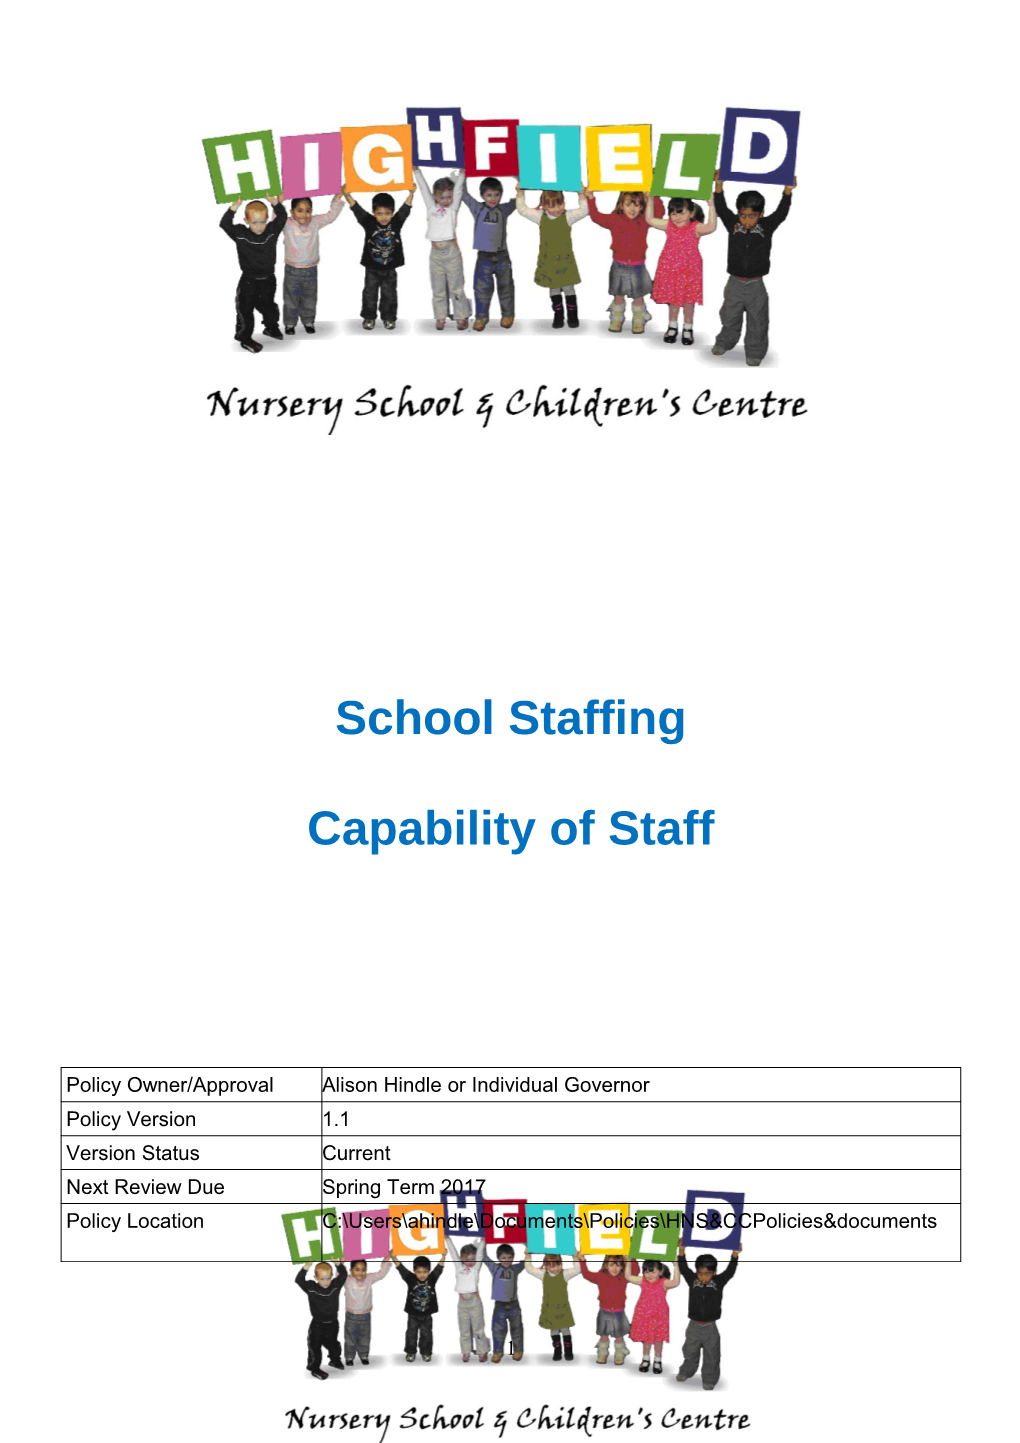 School Staffing/Capability of Staff